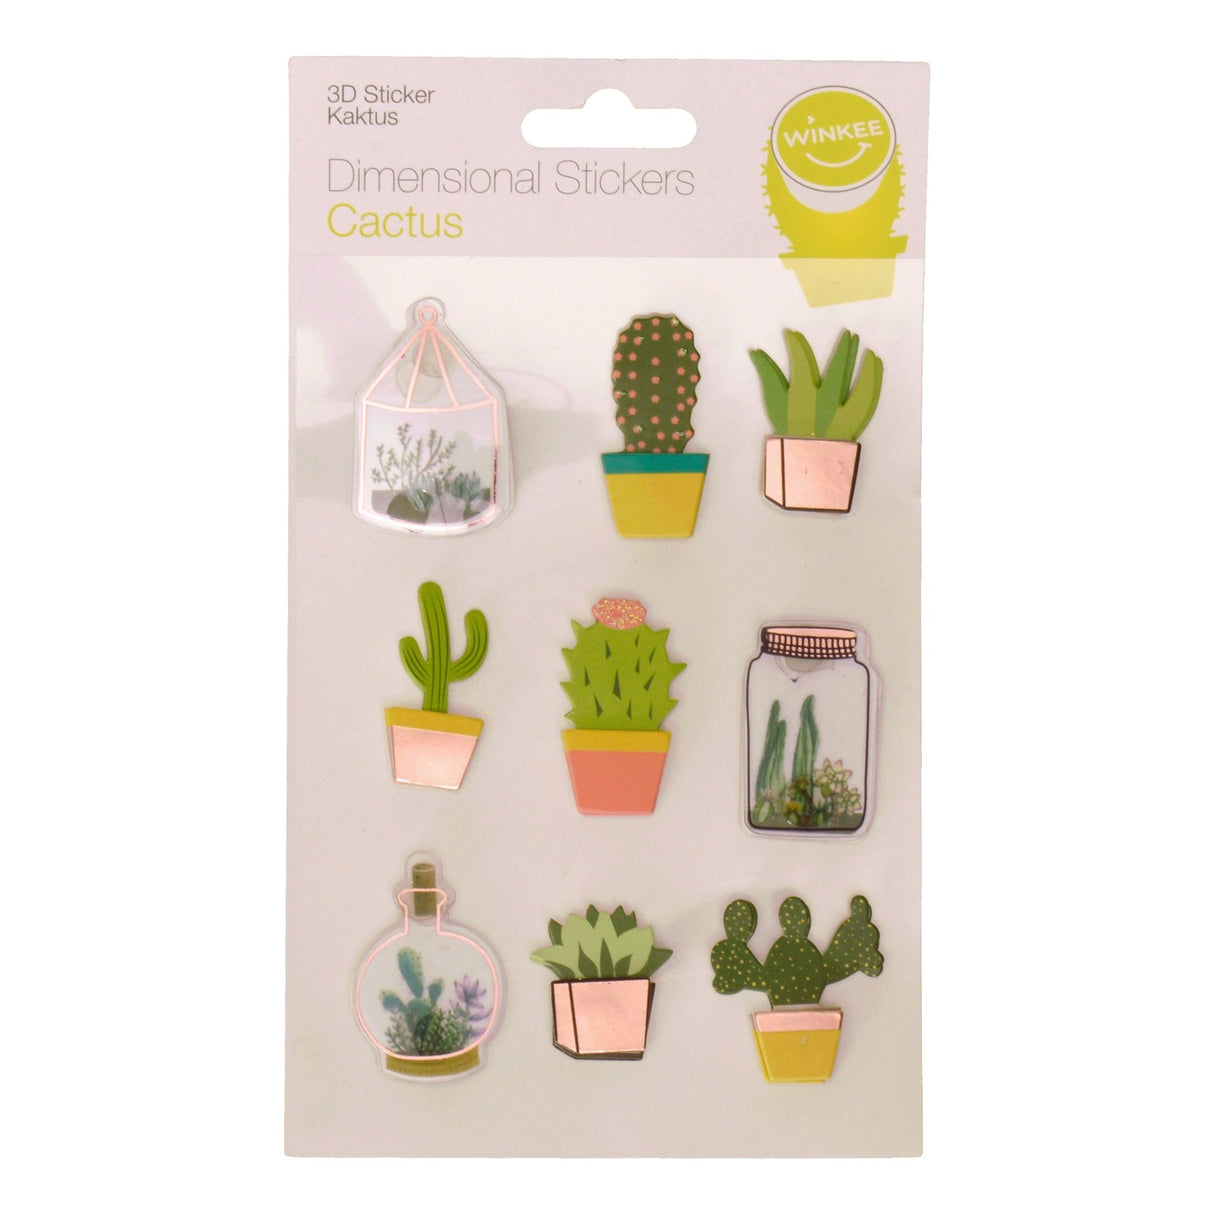 Kaktus 3D Sticker im 9er Set